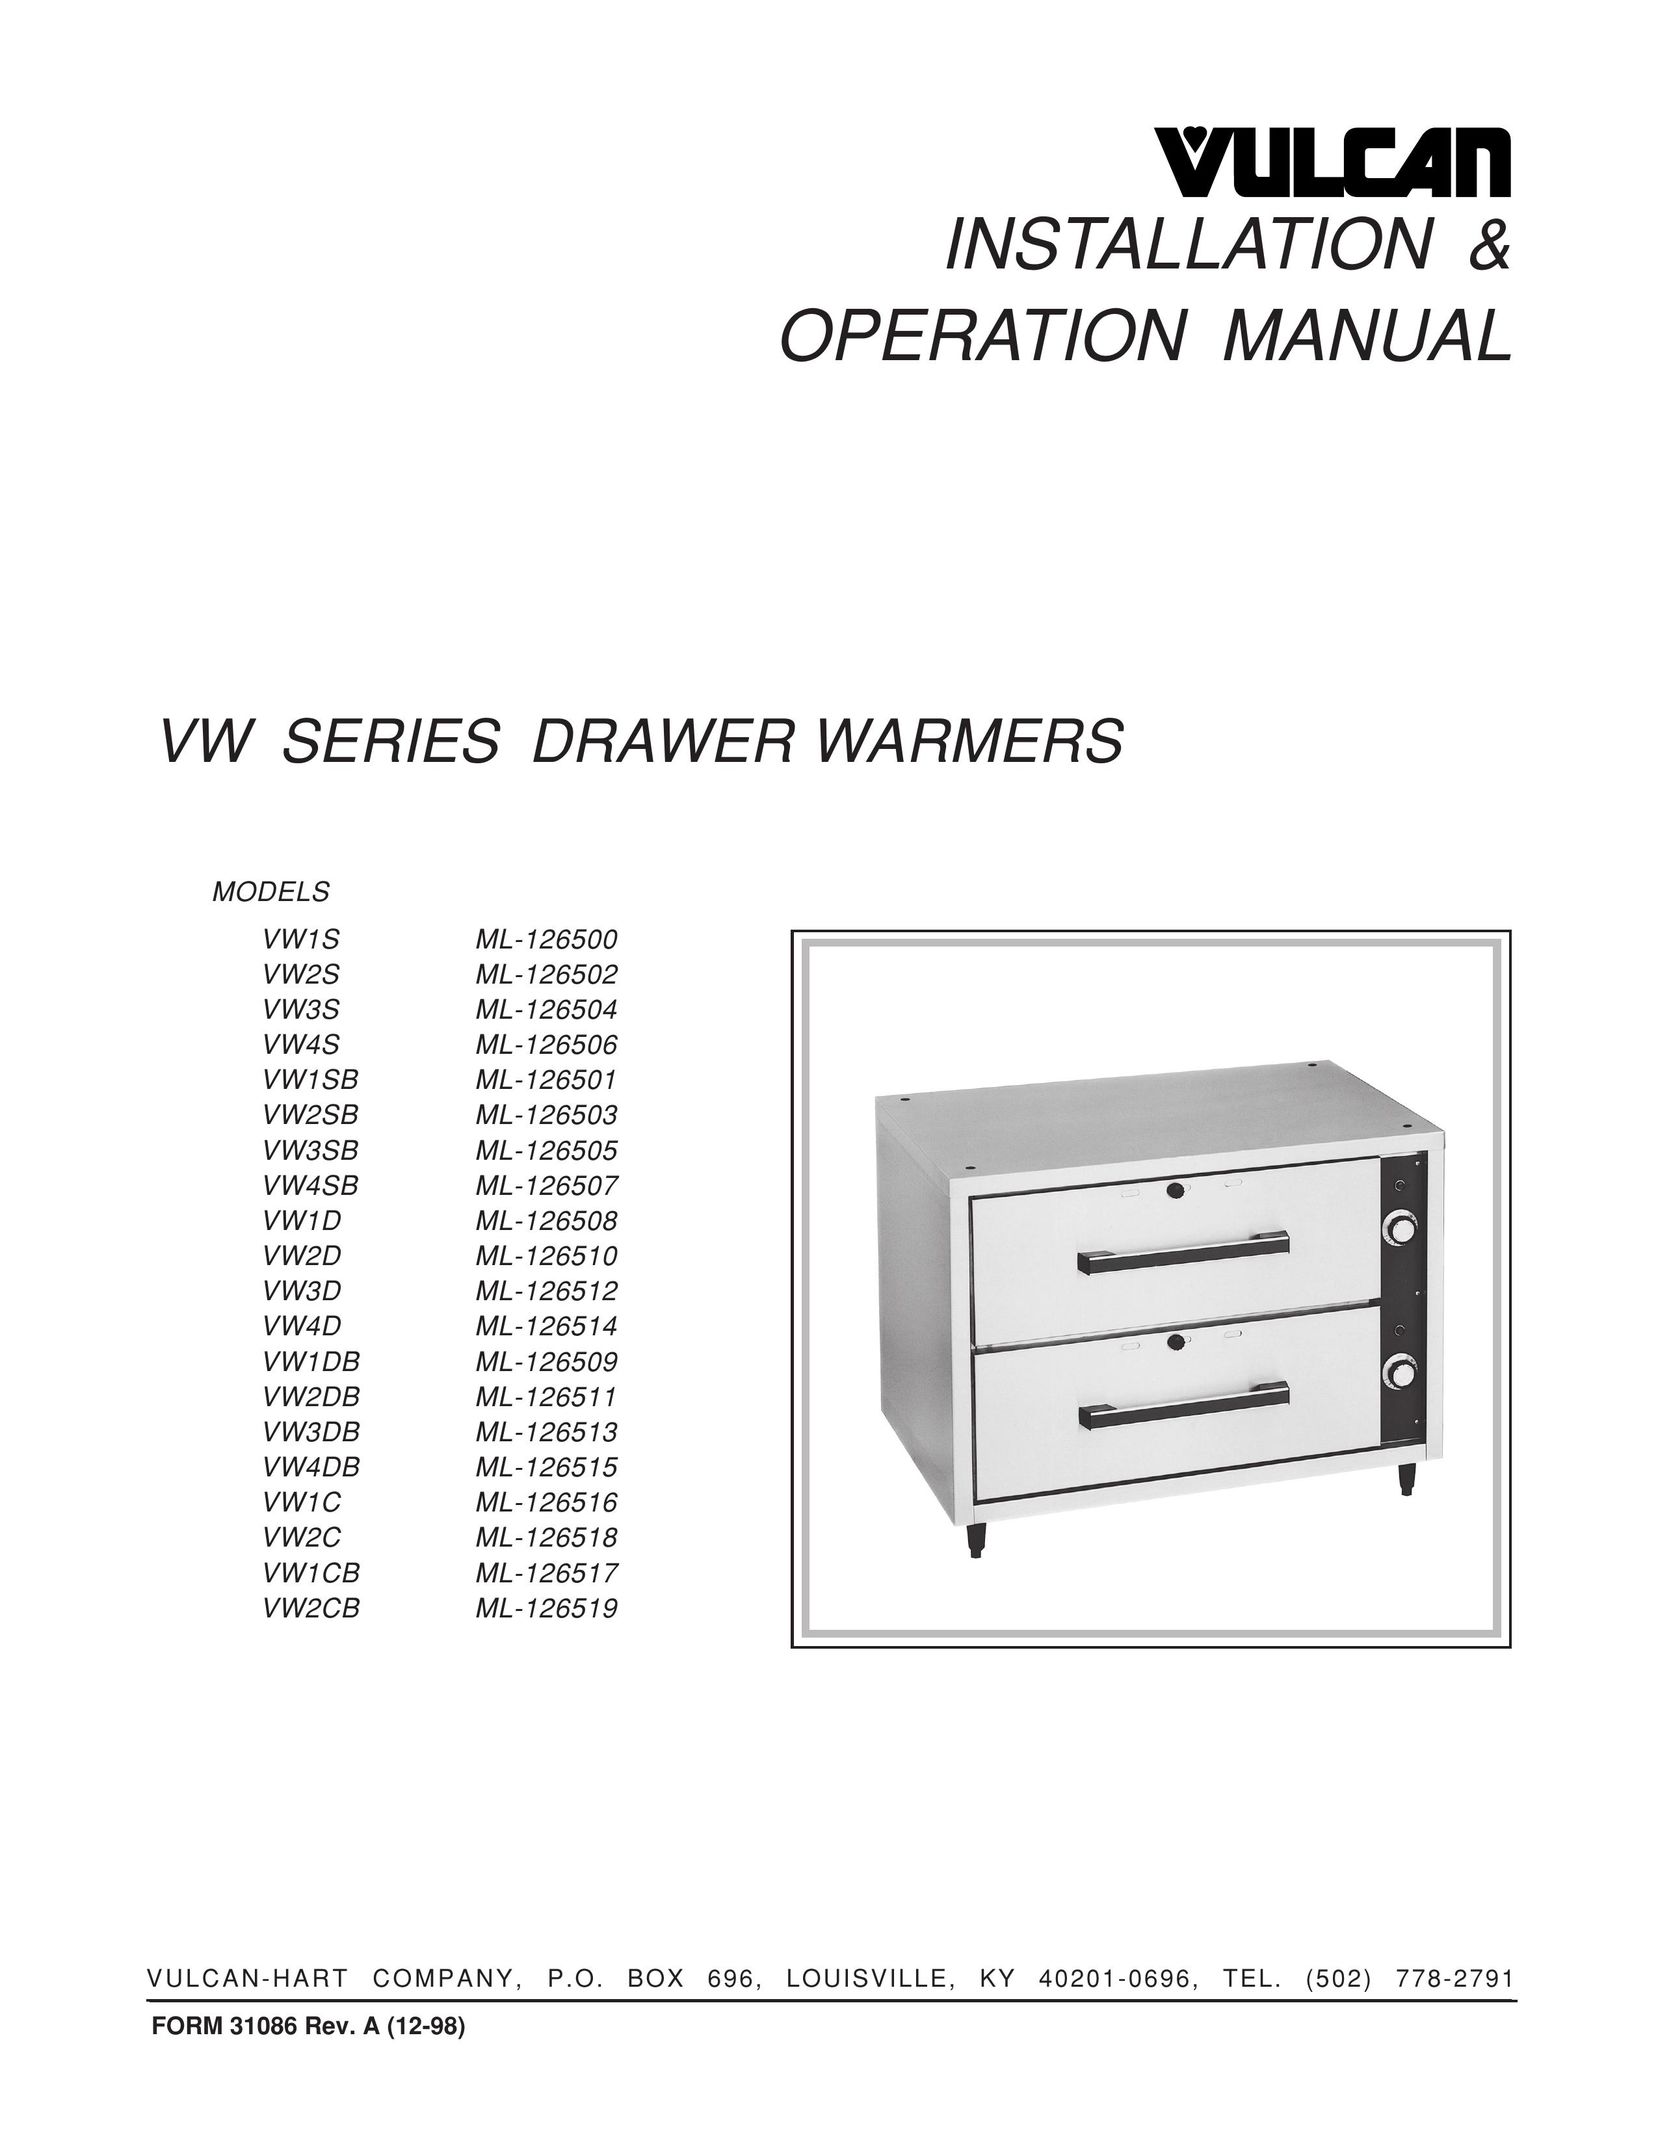 Vulcan-Hart VW2DB ML-126511 Food Warmer User Manual